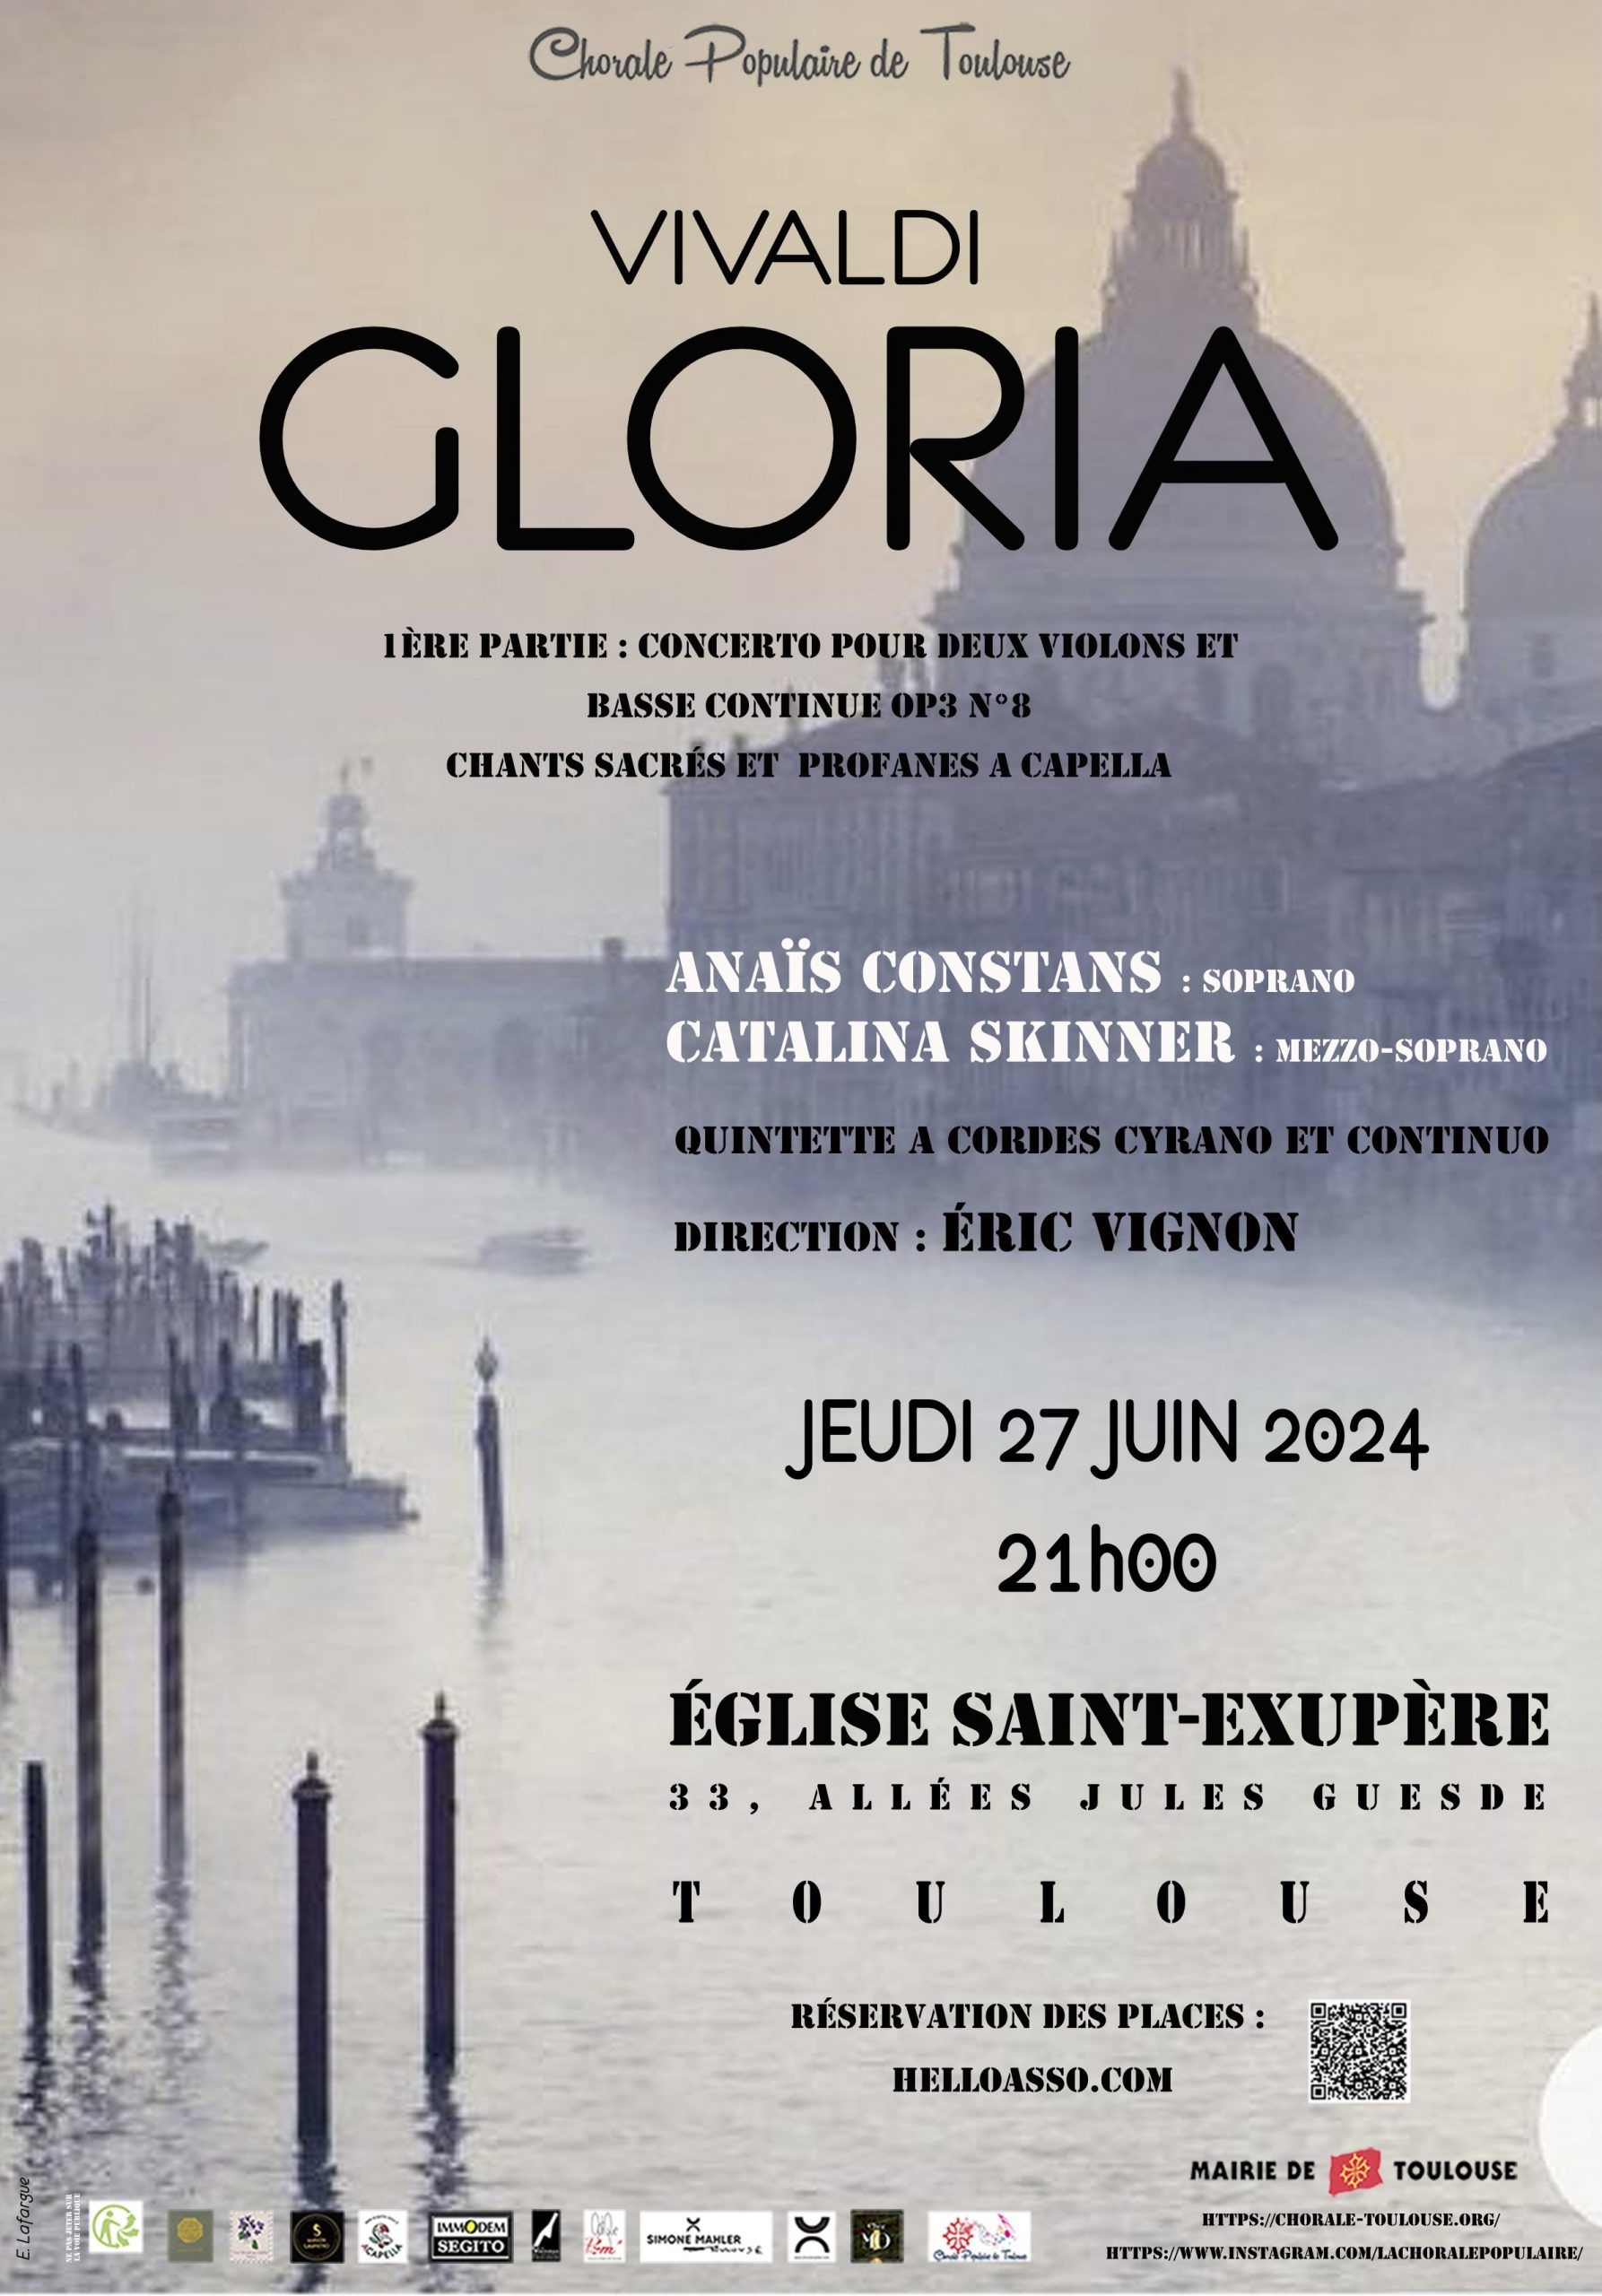 Chorale populaire de Toulouse - Vivaldi Gloria